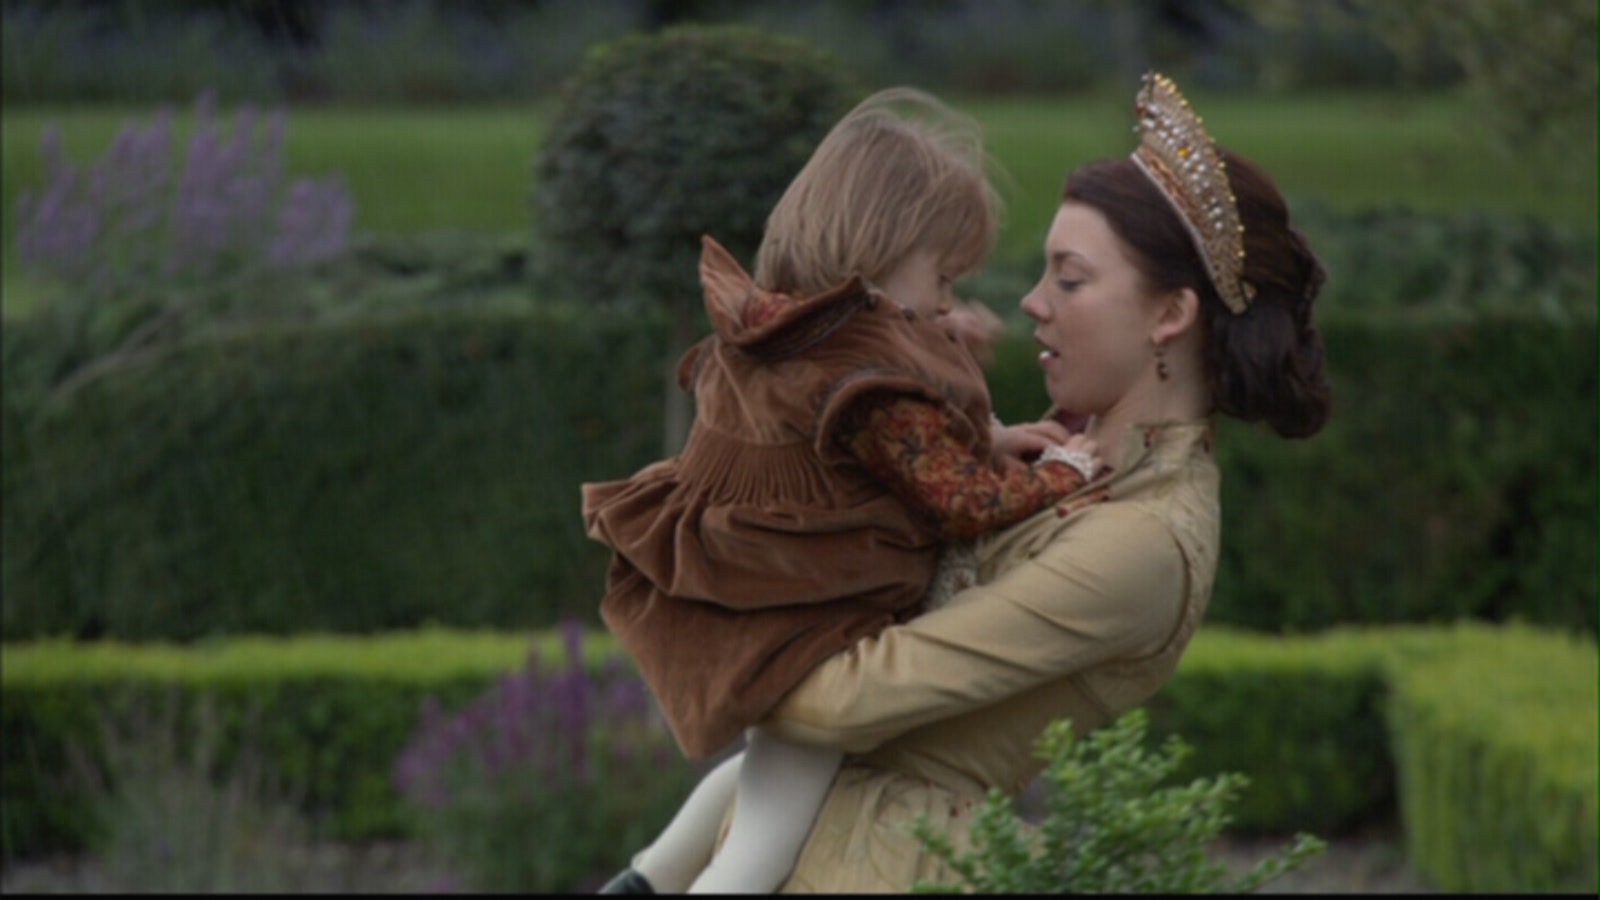 Princess Elizabeth Tudor Photo Gallery - The Tudors Wiki